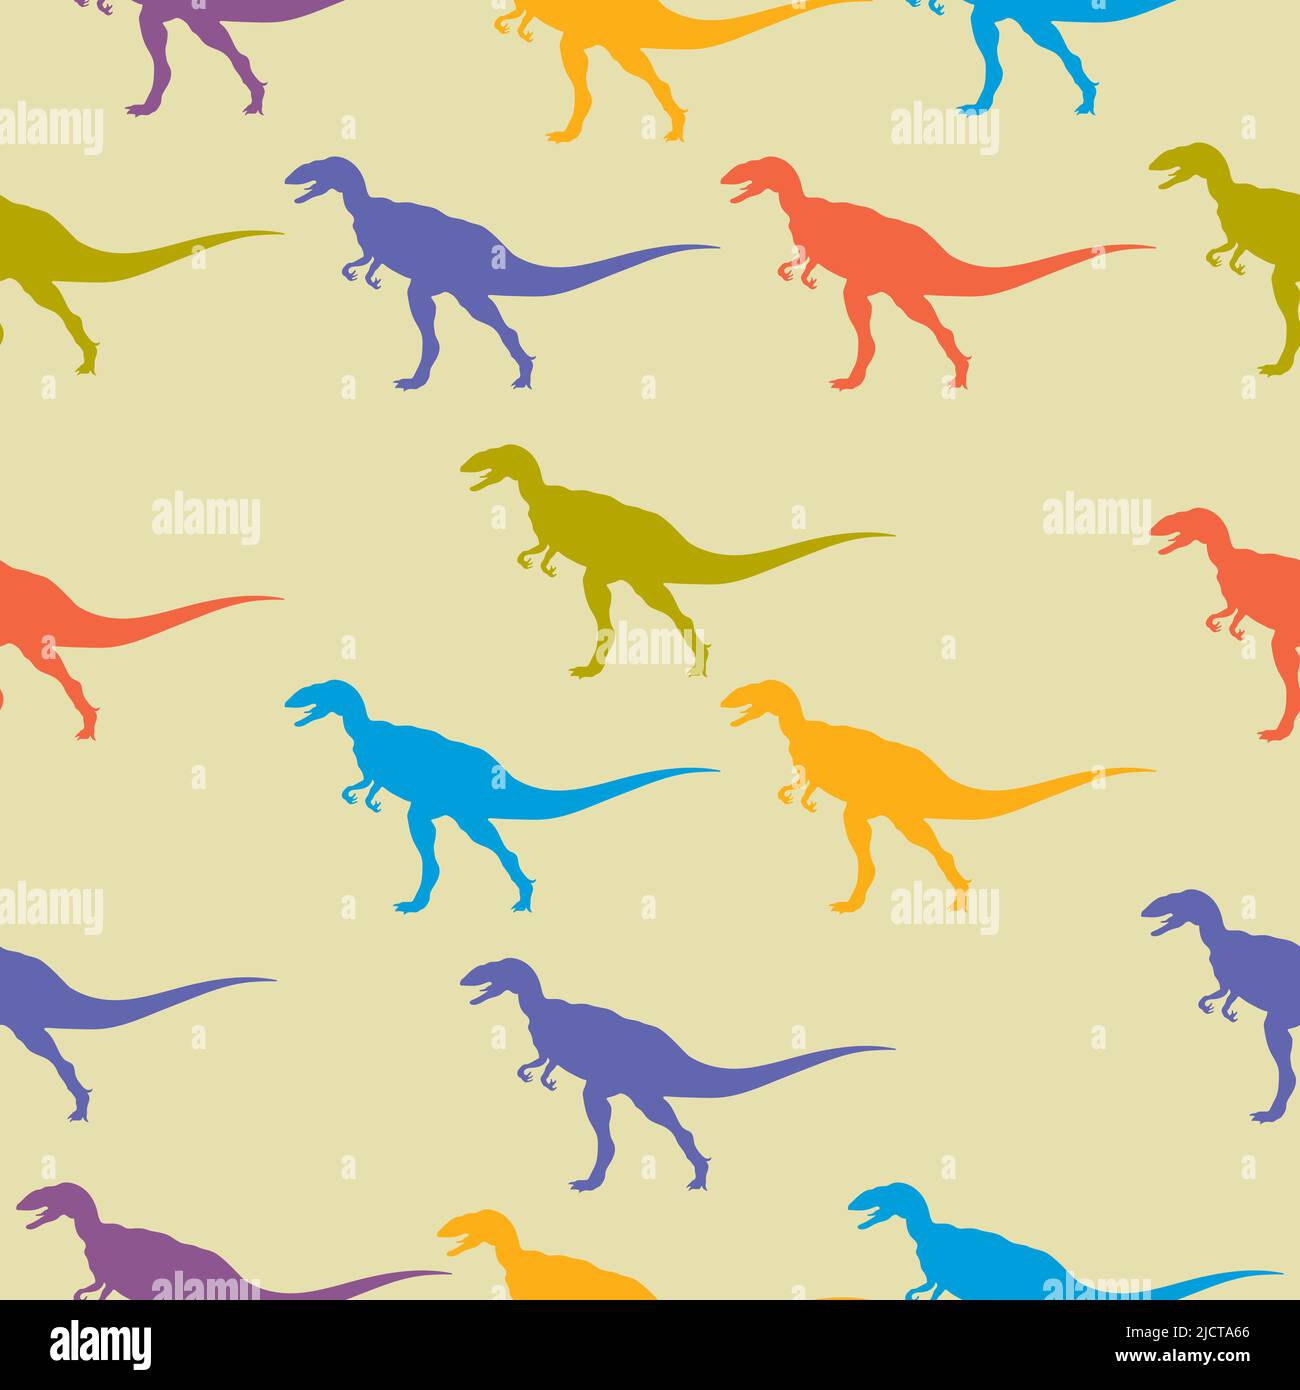 Cute Dinosaur Seamless Pattern Adorable Cartoon Dinosaurs Background  Stock Vector  Illustration of pastel child 90056615